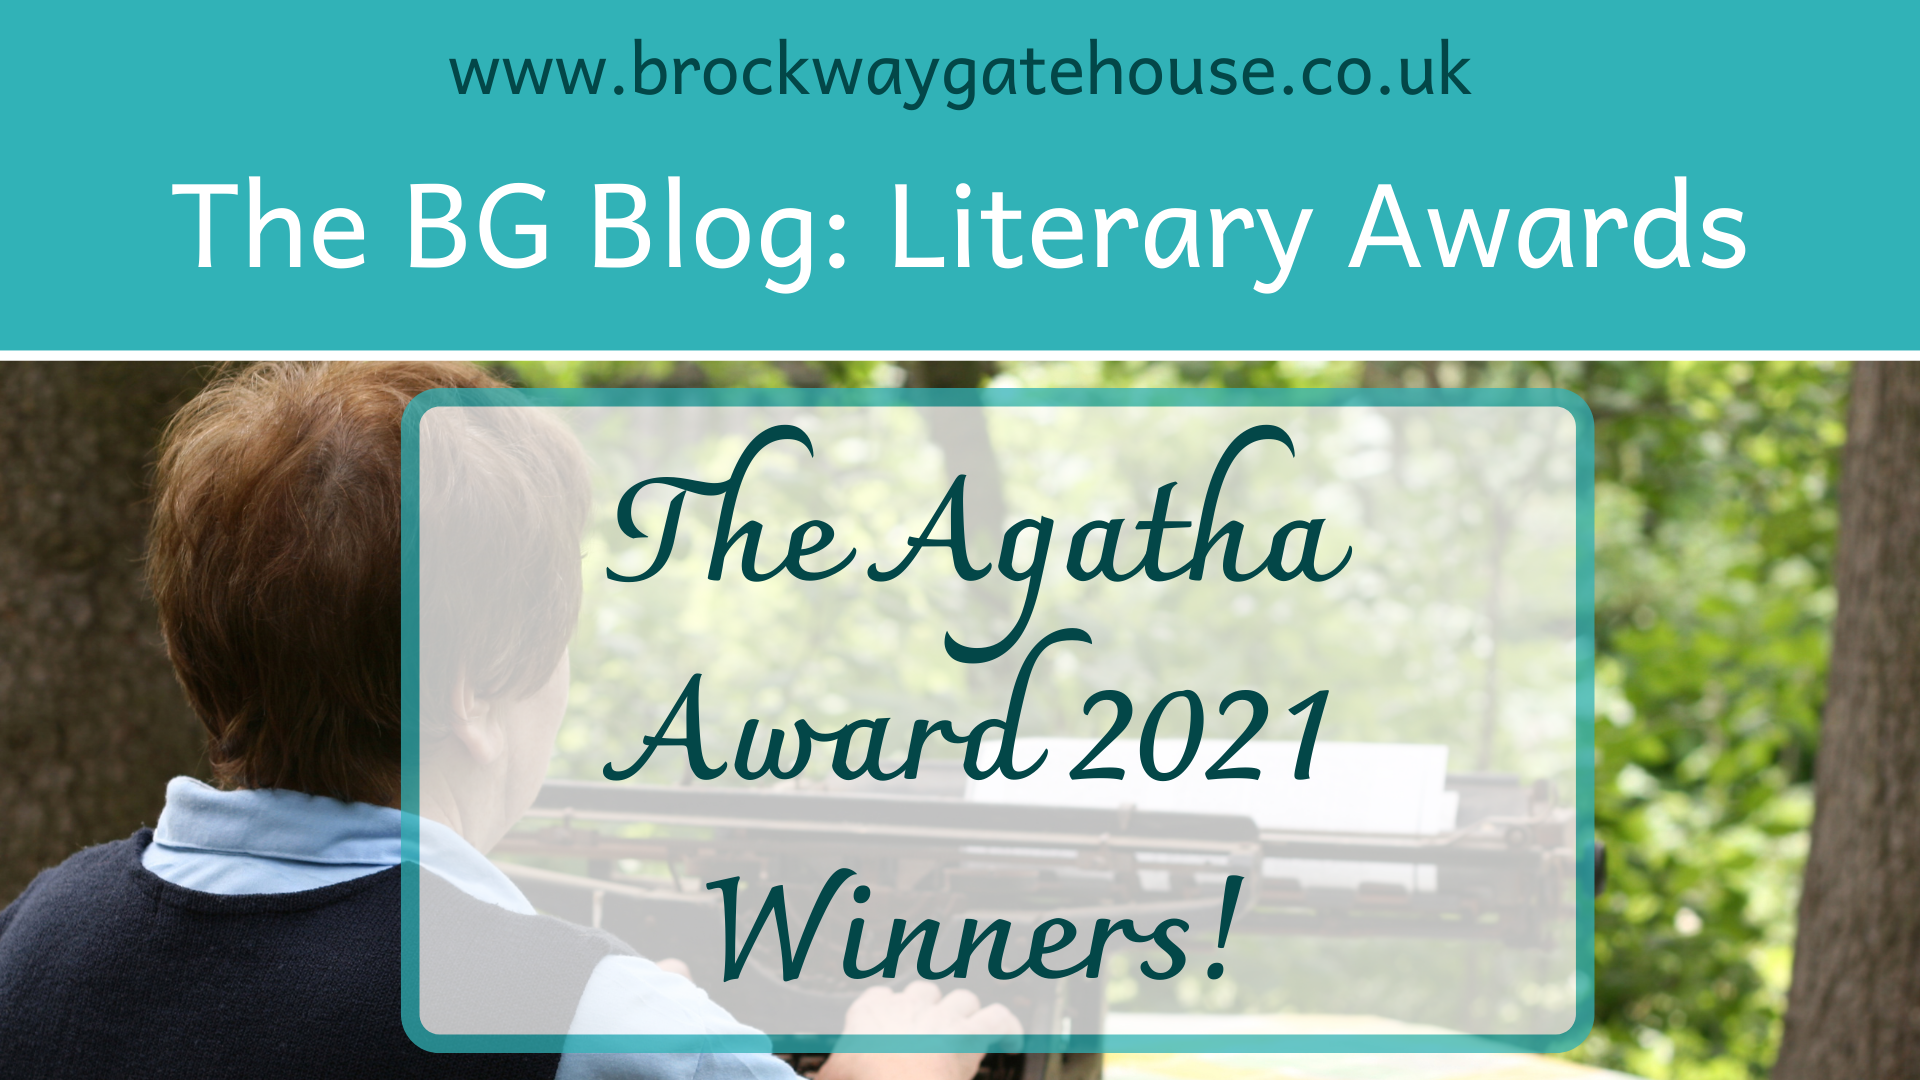 Post Featured Image 1920x1080 - The BG Blog - The Agatha Award 2021 Winners